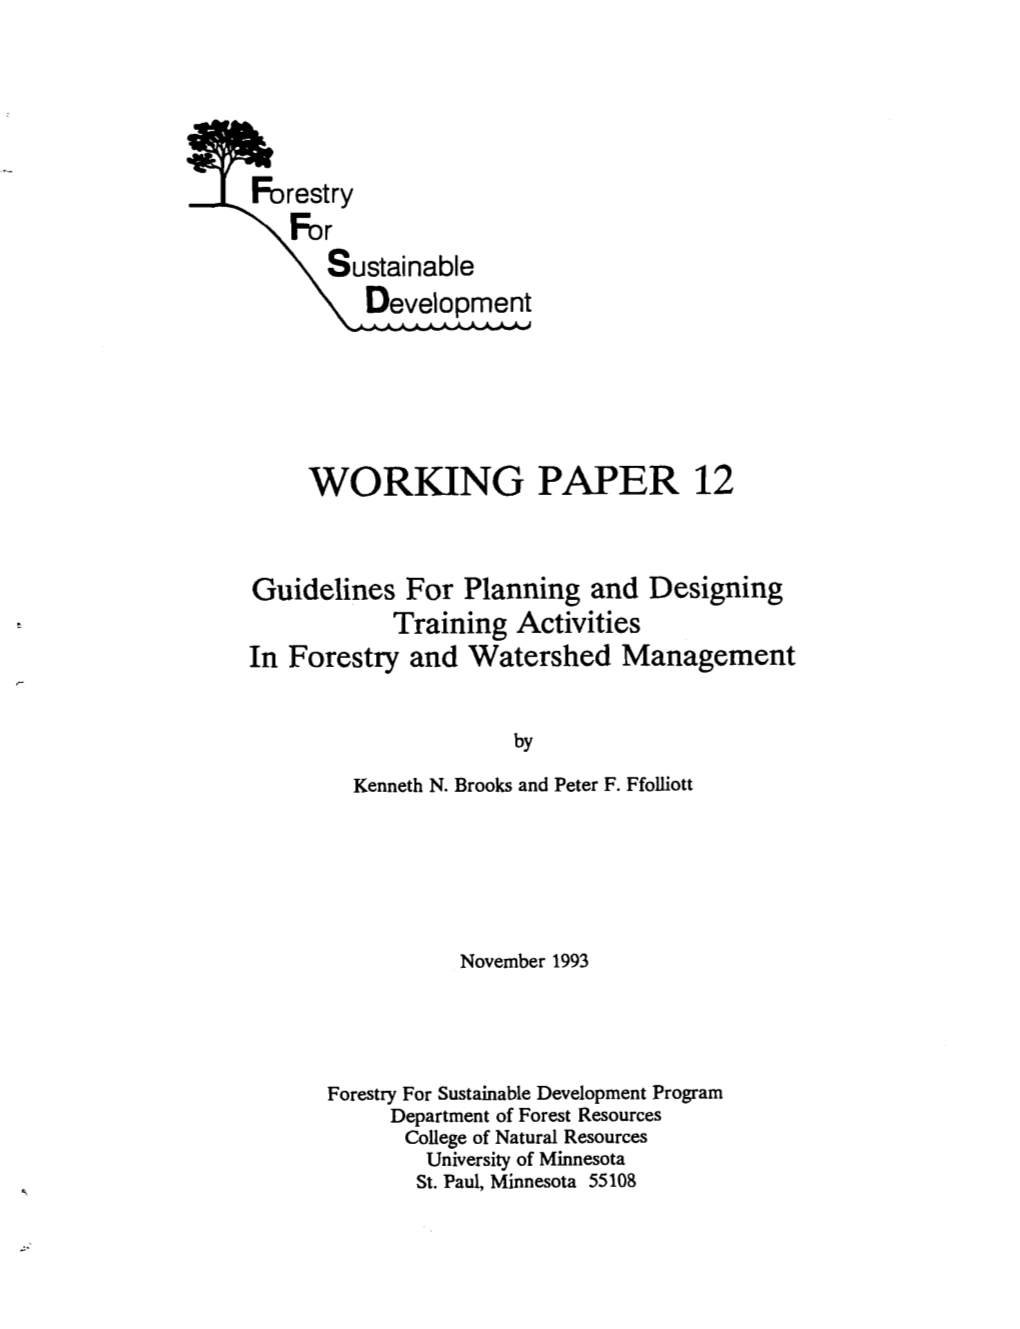 FFSD Working Paper 12